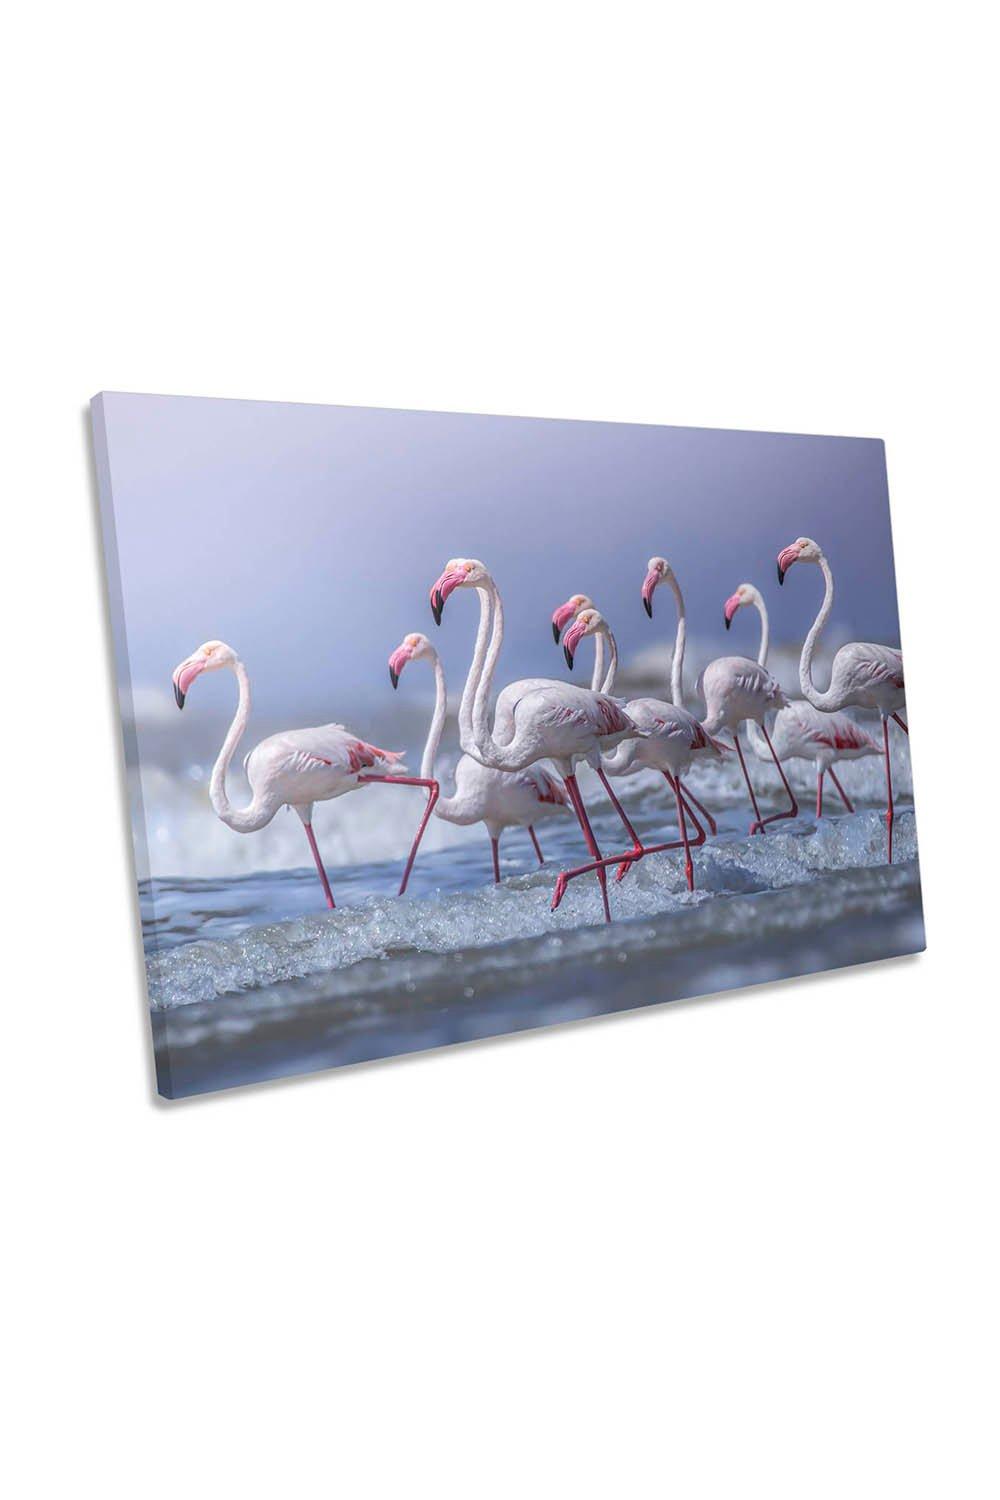 Beach Marathon Flamingo Birds Canvas Wall Art Picture Print